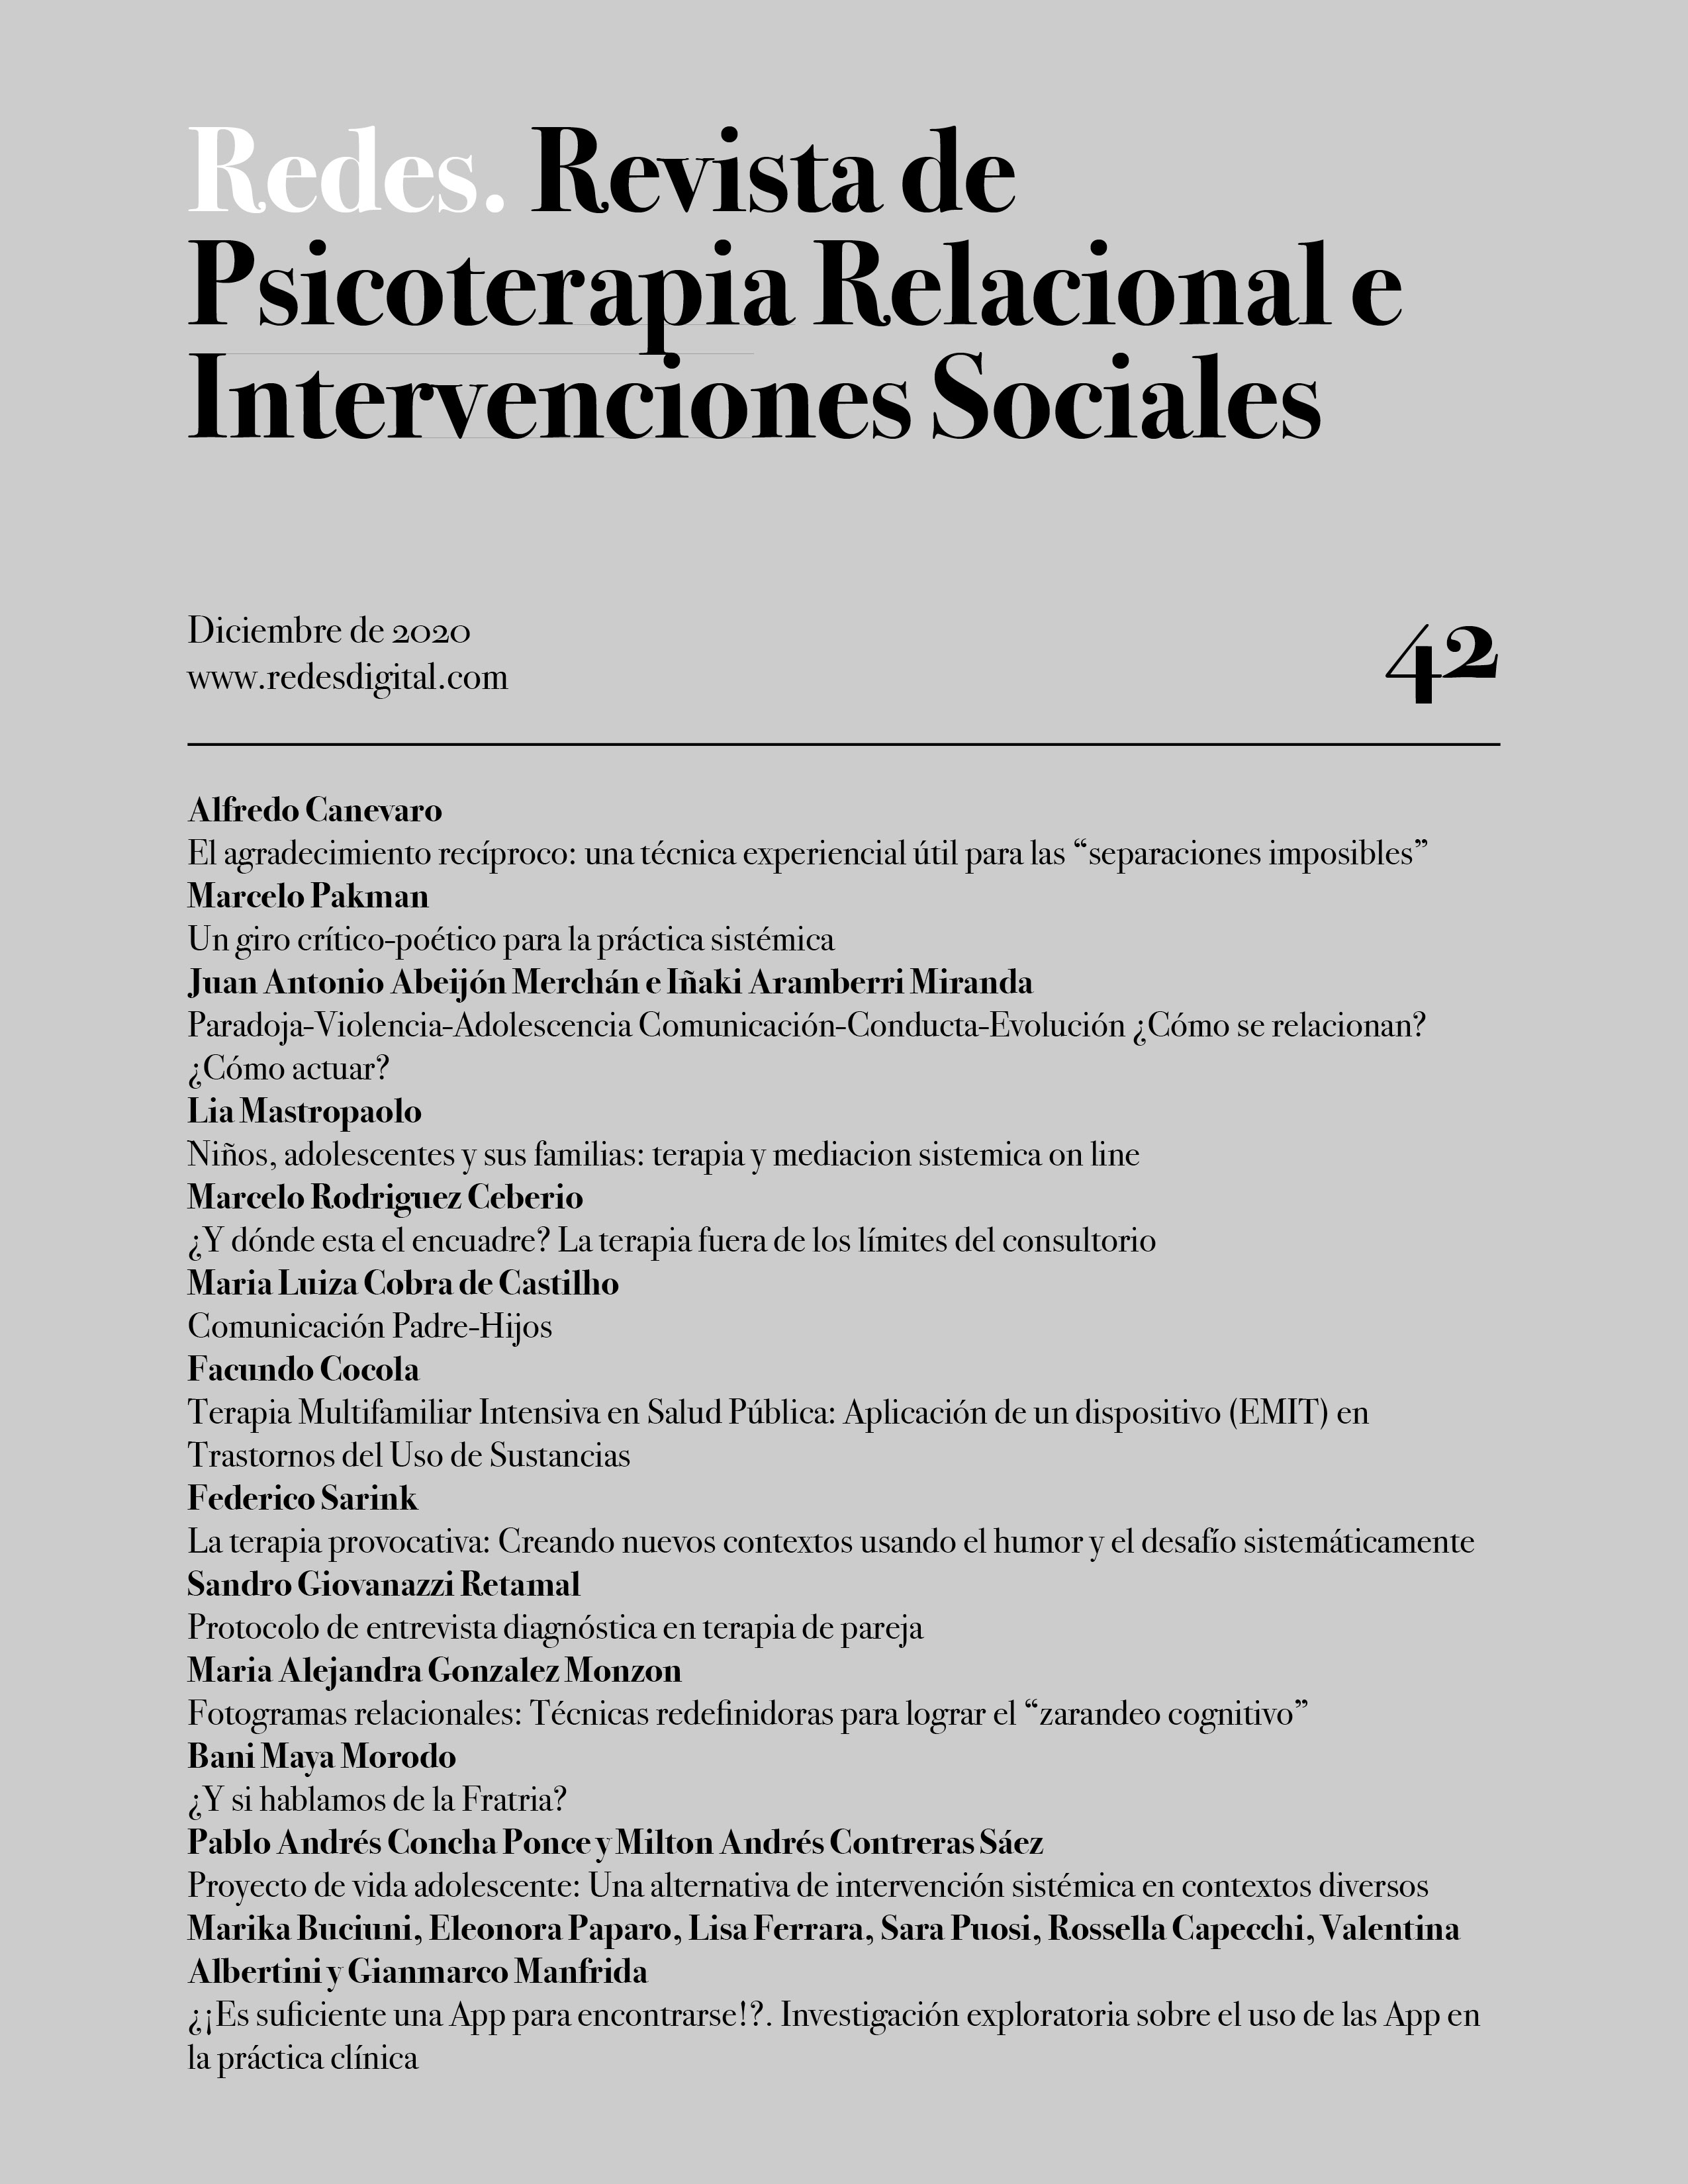 Redes. Revista de Psicoterapia Relacional e Intervenciones Sociales